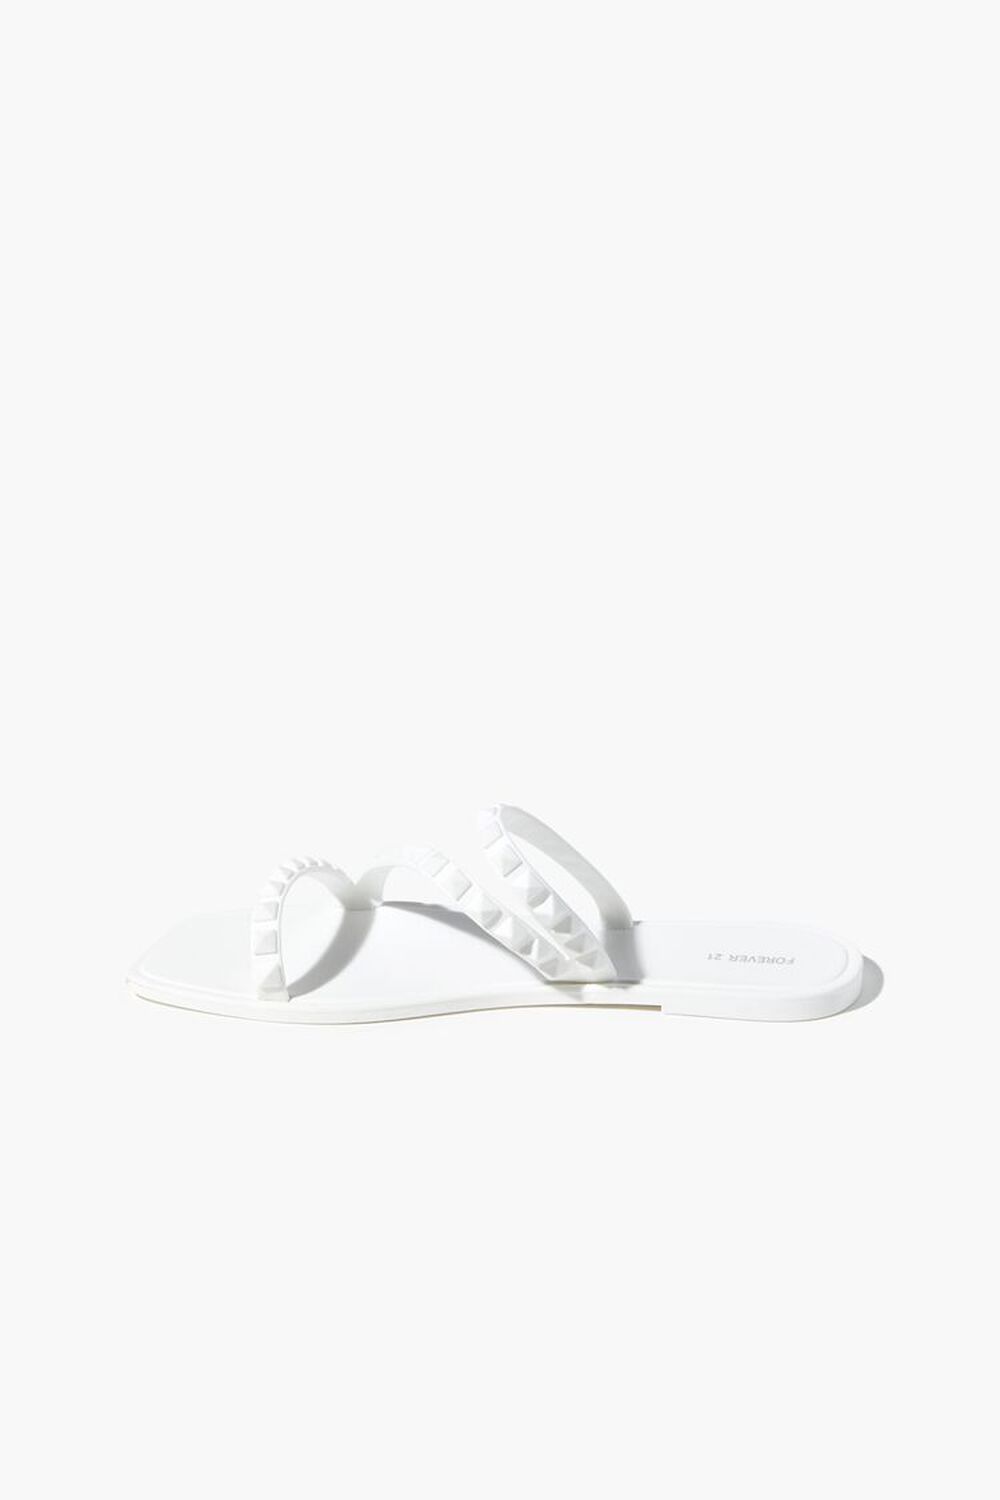 WHITE Studded Square-Toe Sandals, image 2